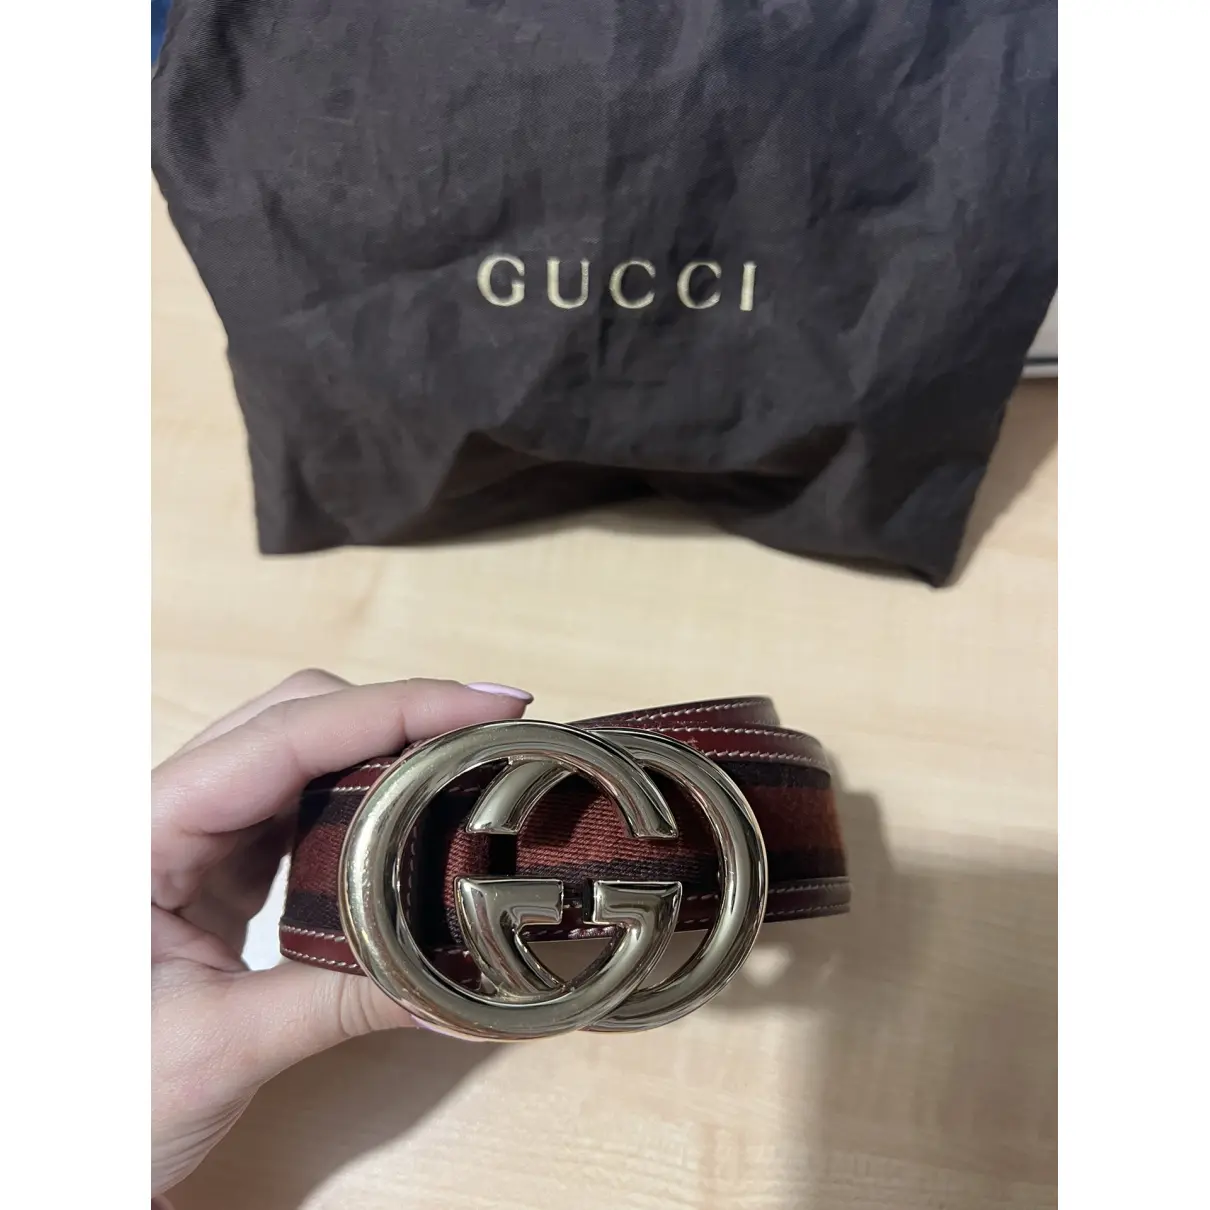 Buy Gucci GG Buckle belt online